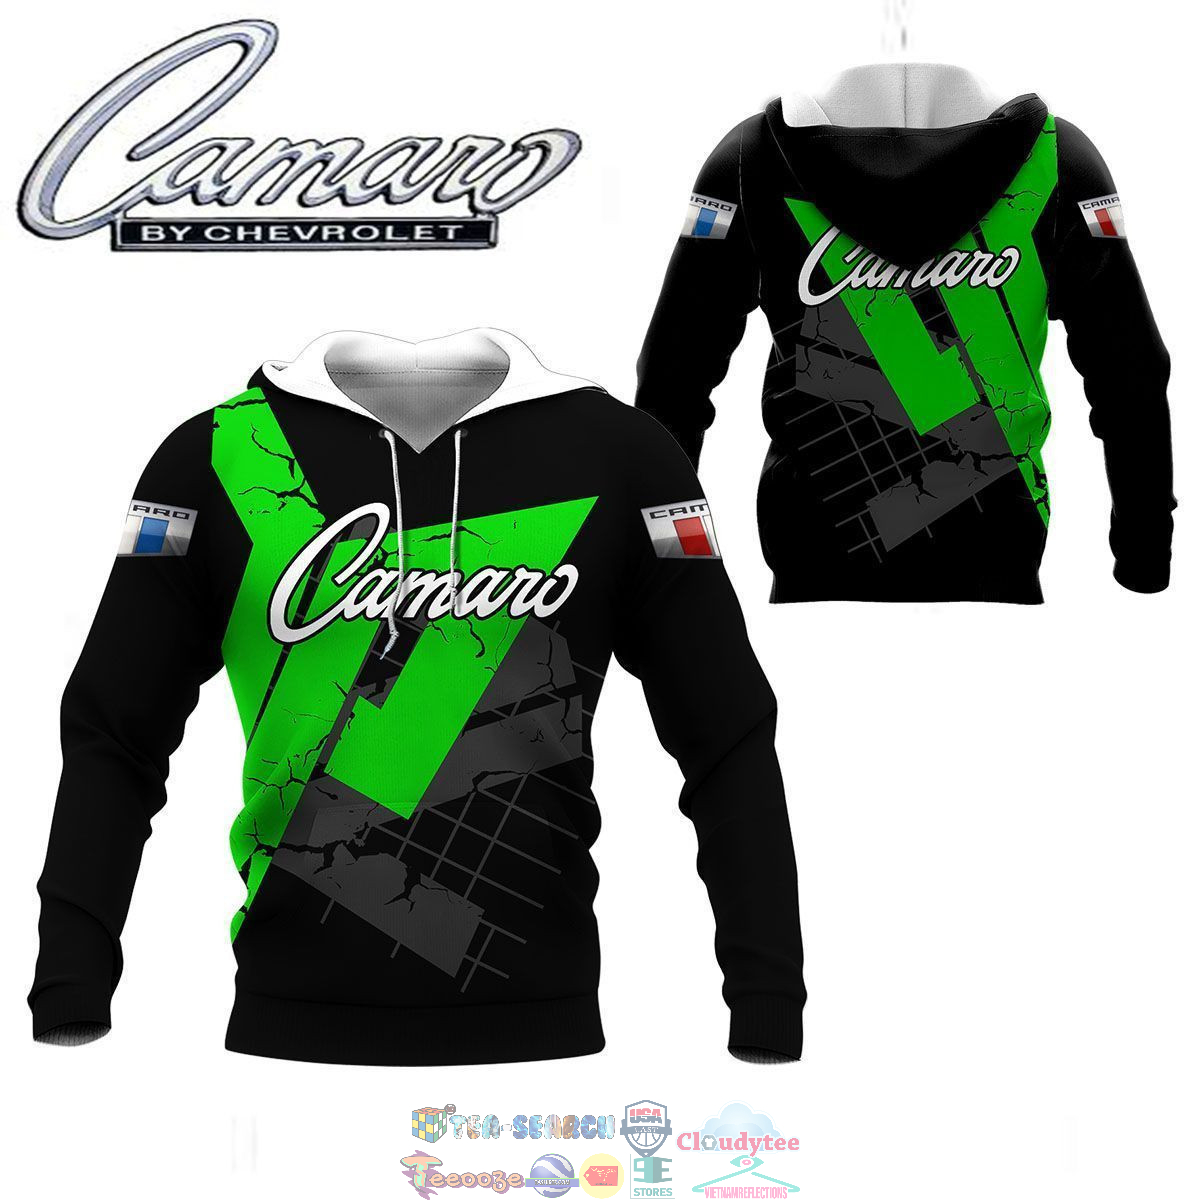 Chevrolet Camaro ver 7 3D hoodie and t-shirt – Saleoff